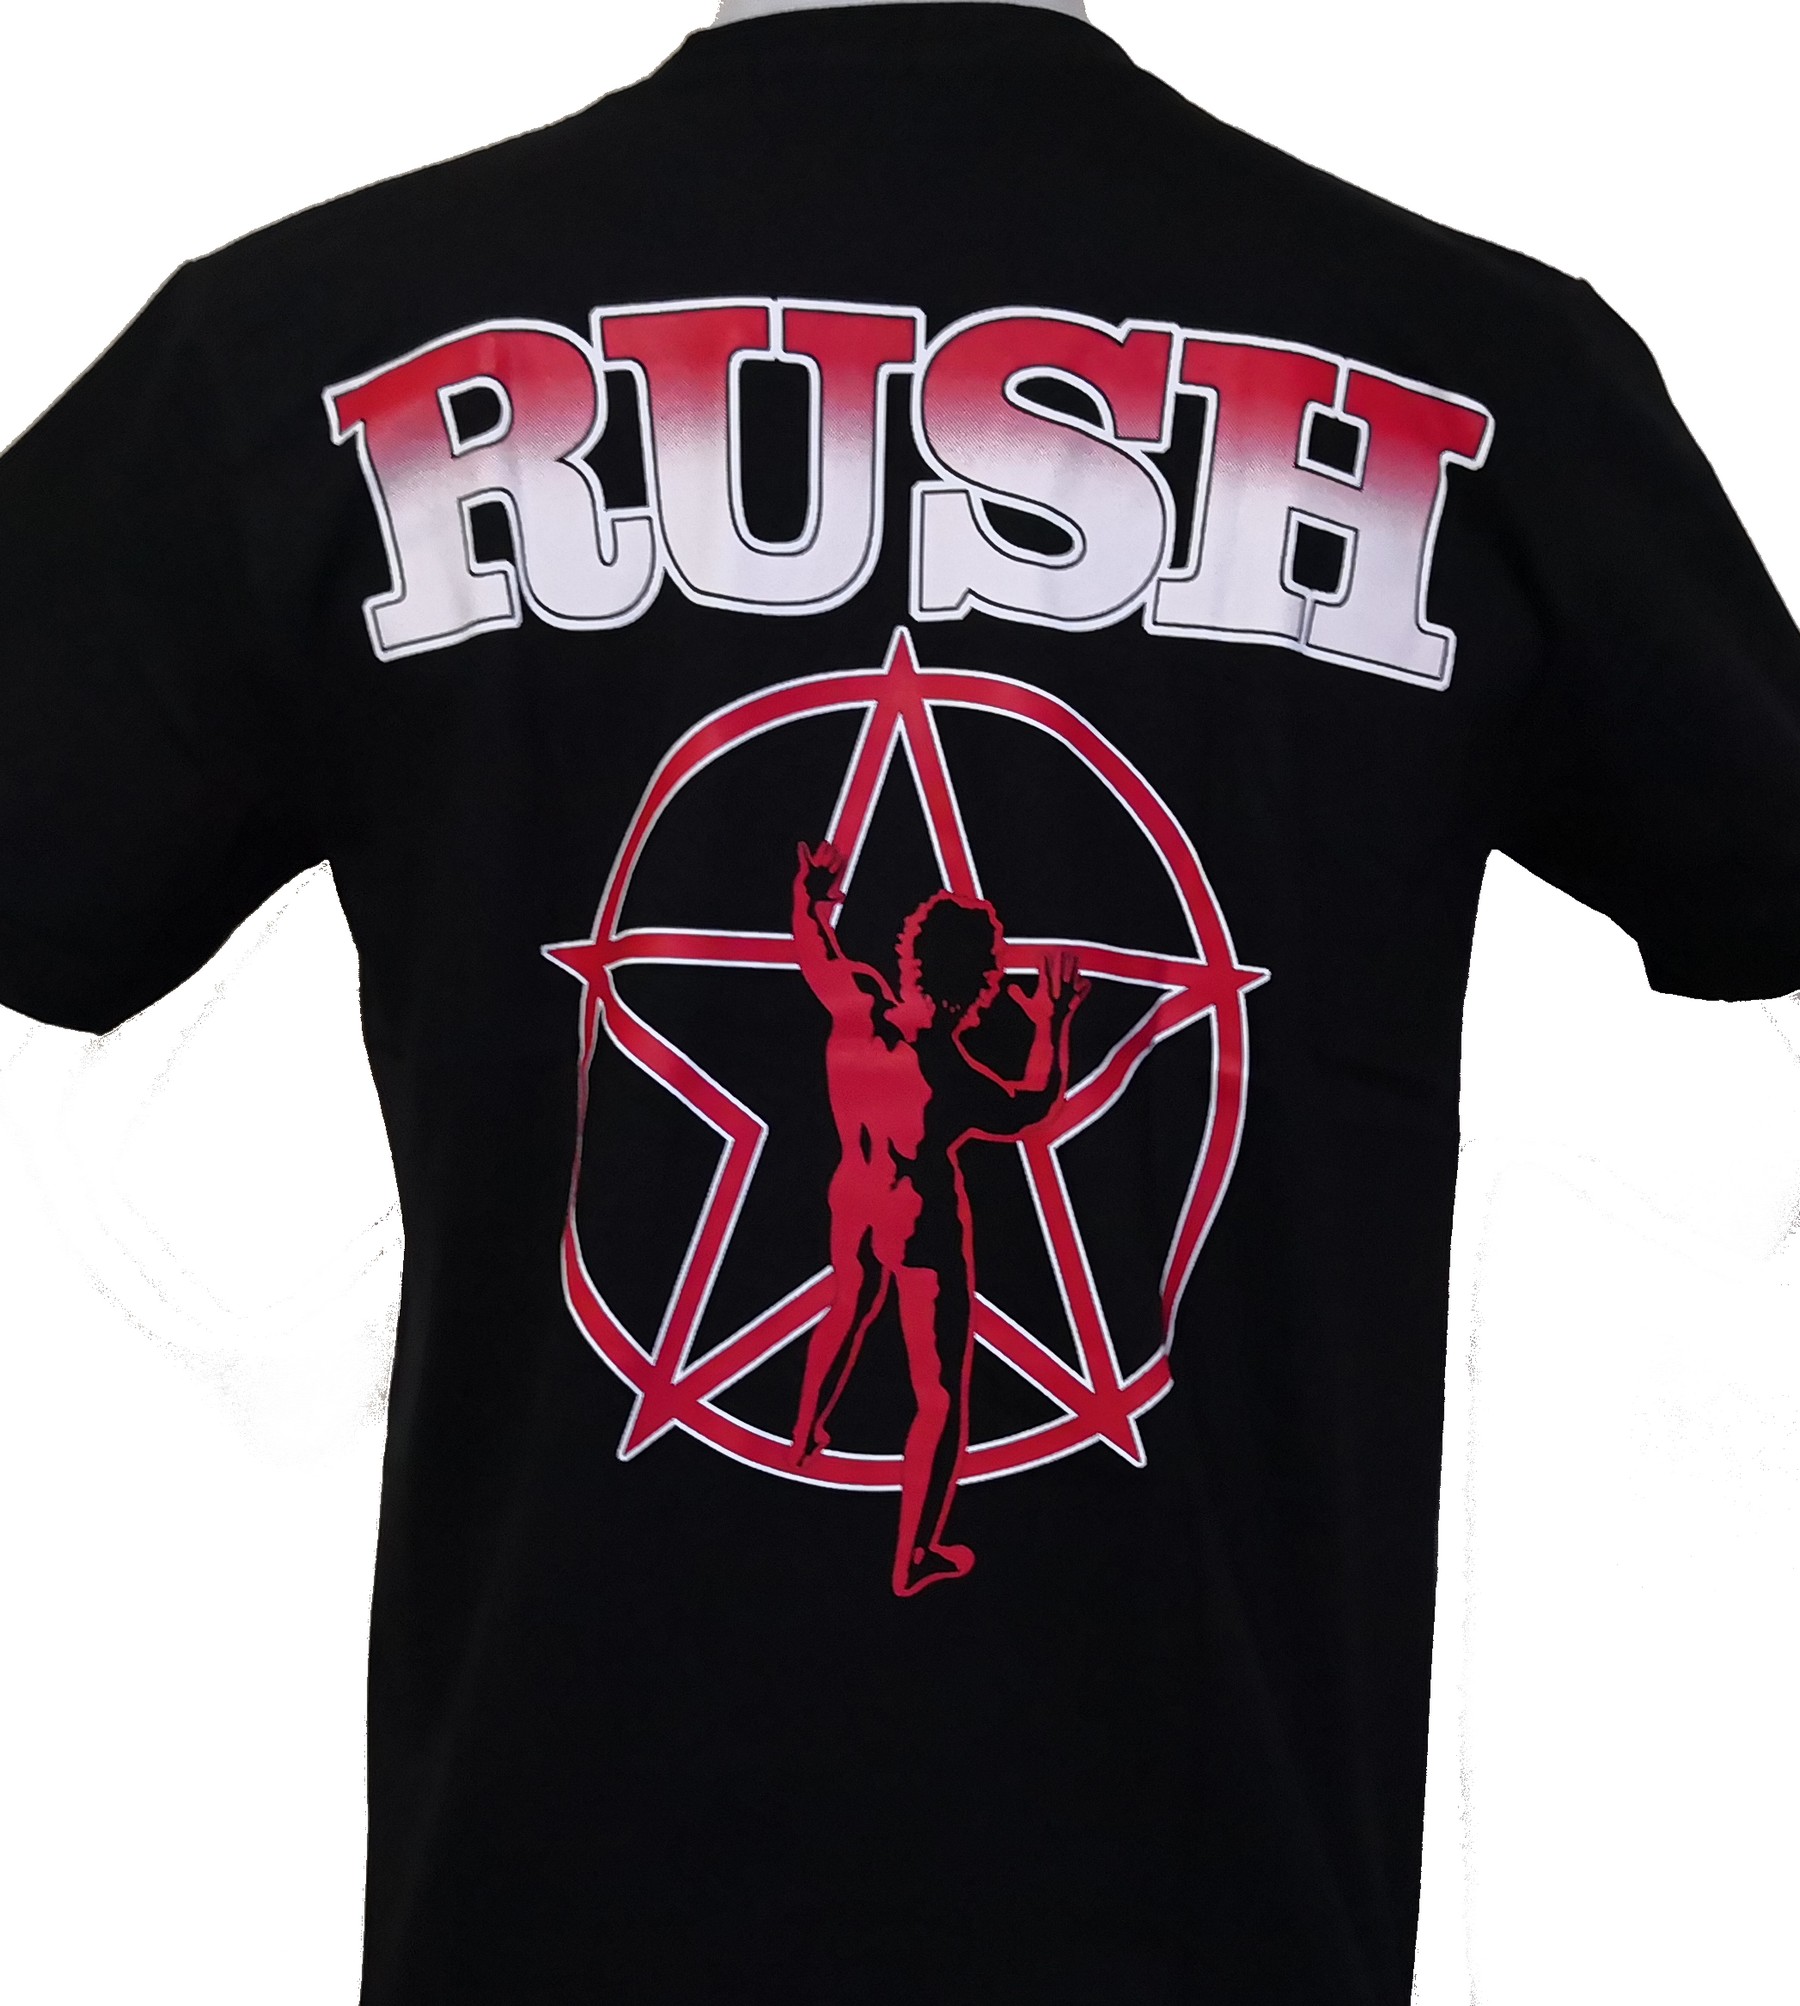 S Rush – RoxxBKK size t-shirt